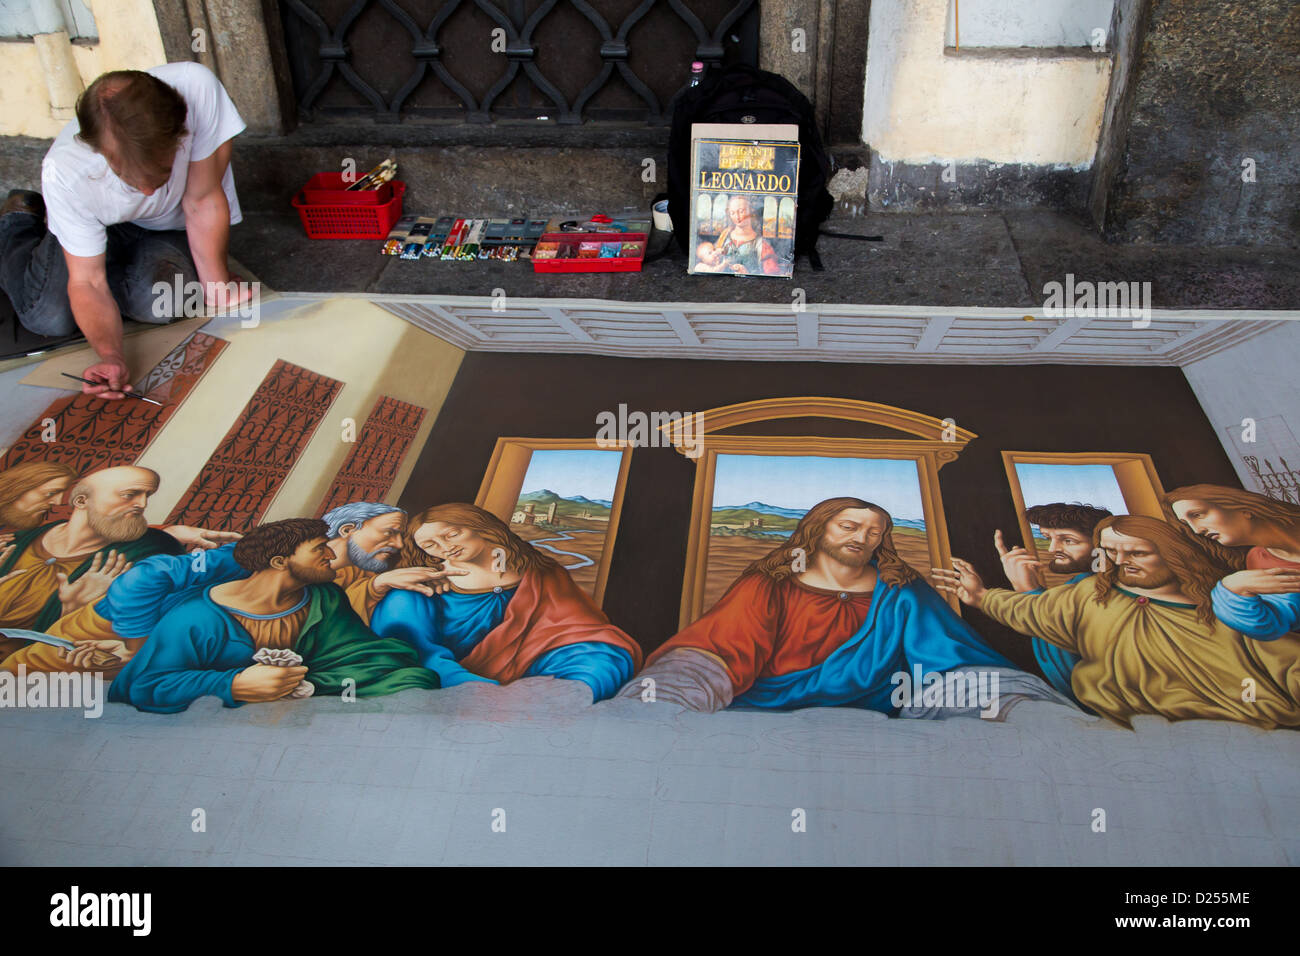 Streetart-Künstler in Turin Italien arbeitet an Skizze basiert auf "The Last Supper" Stockfoto